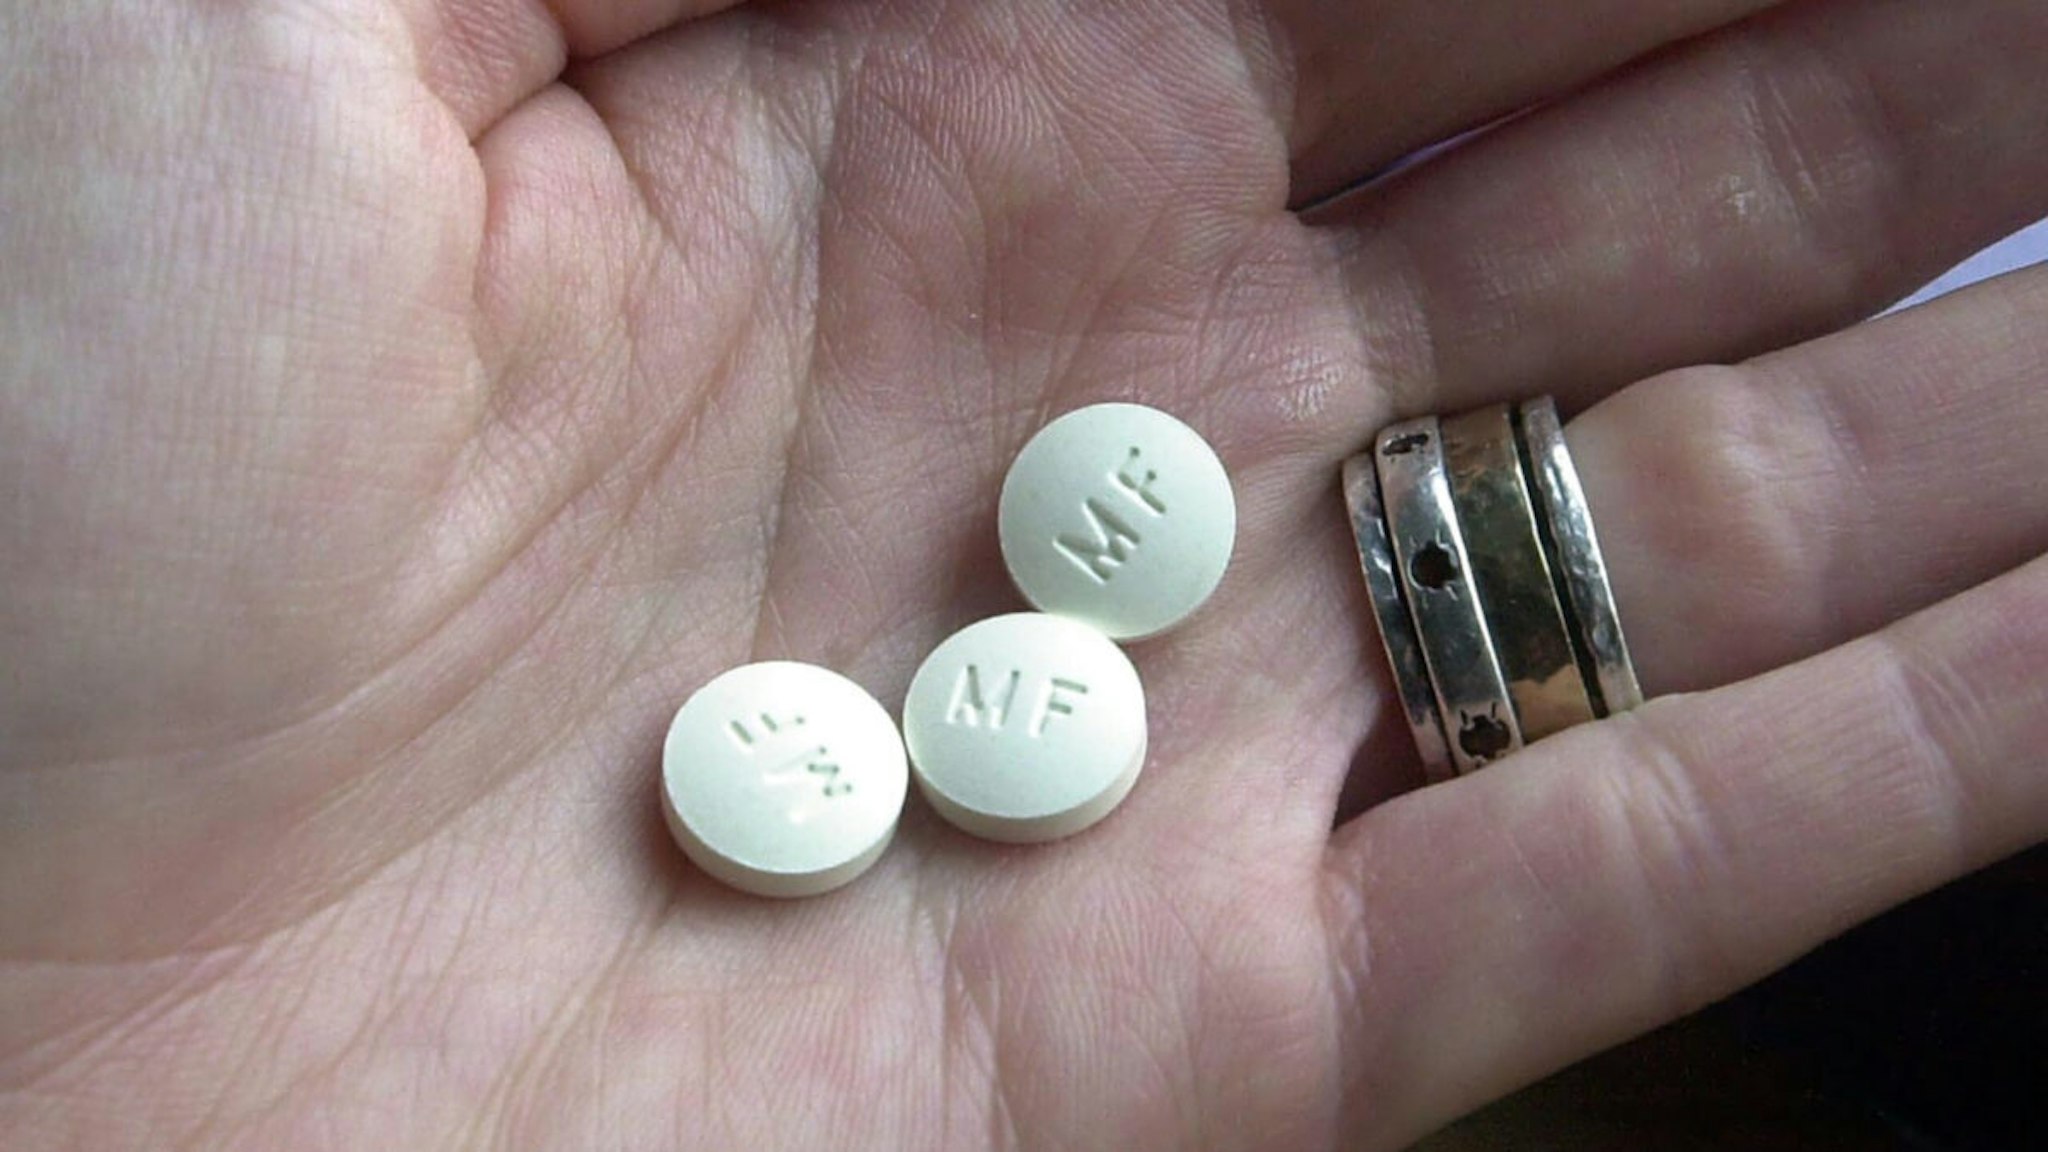 Three RU-486 Mifeprex abortion pills are held in a hand December 1, 2000 in Granite City, Illinois.